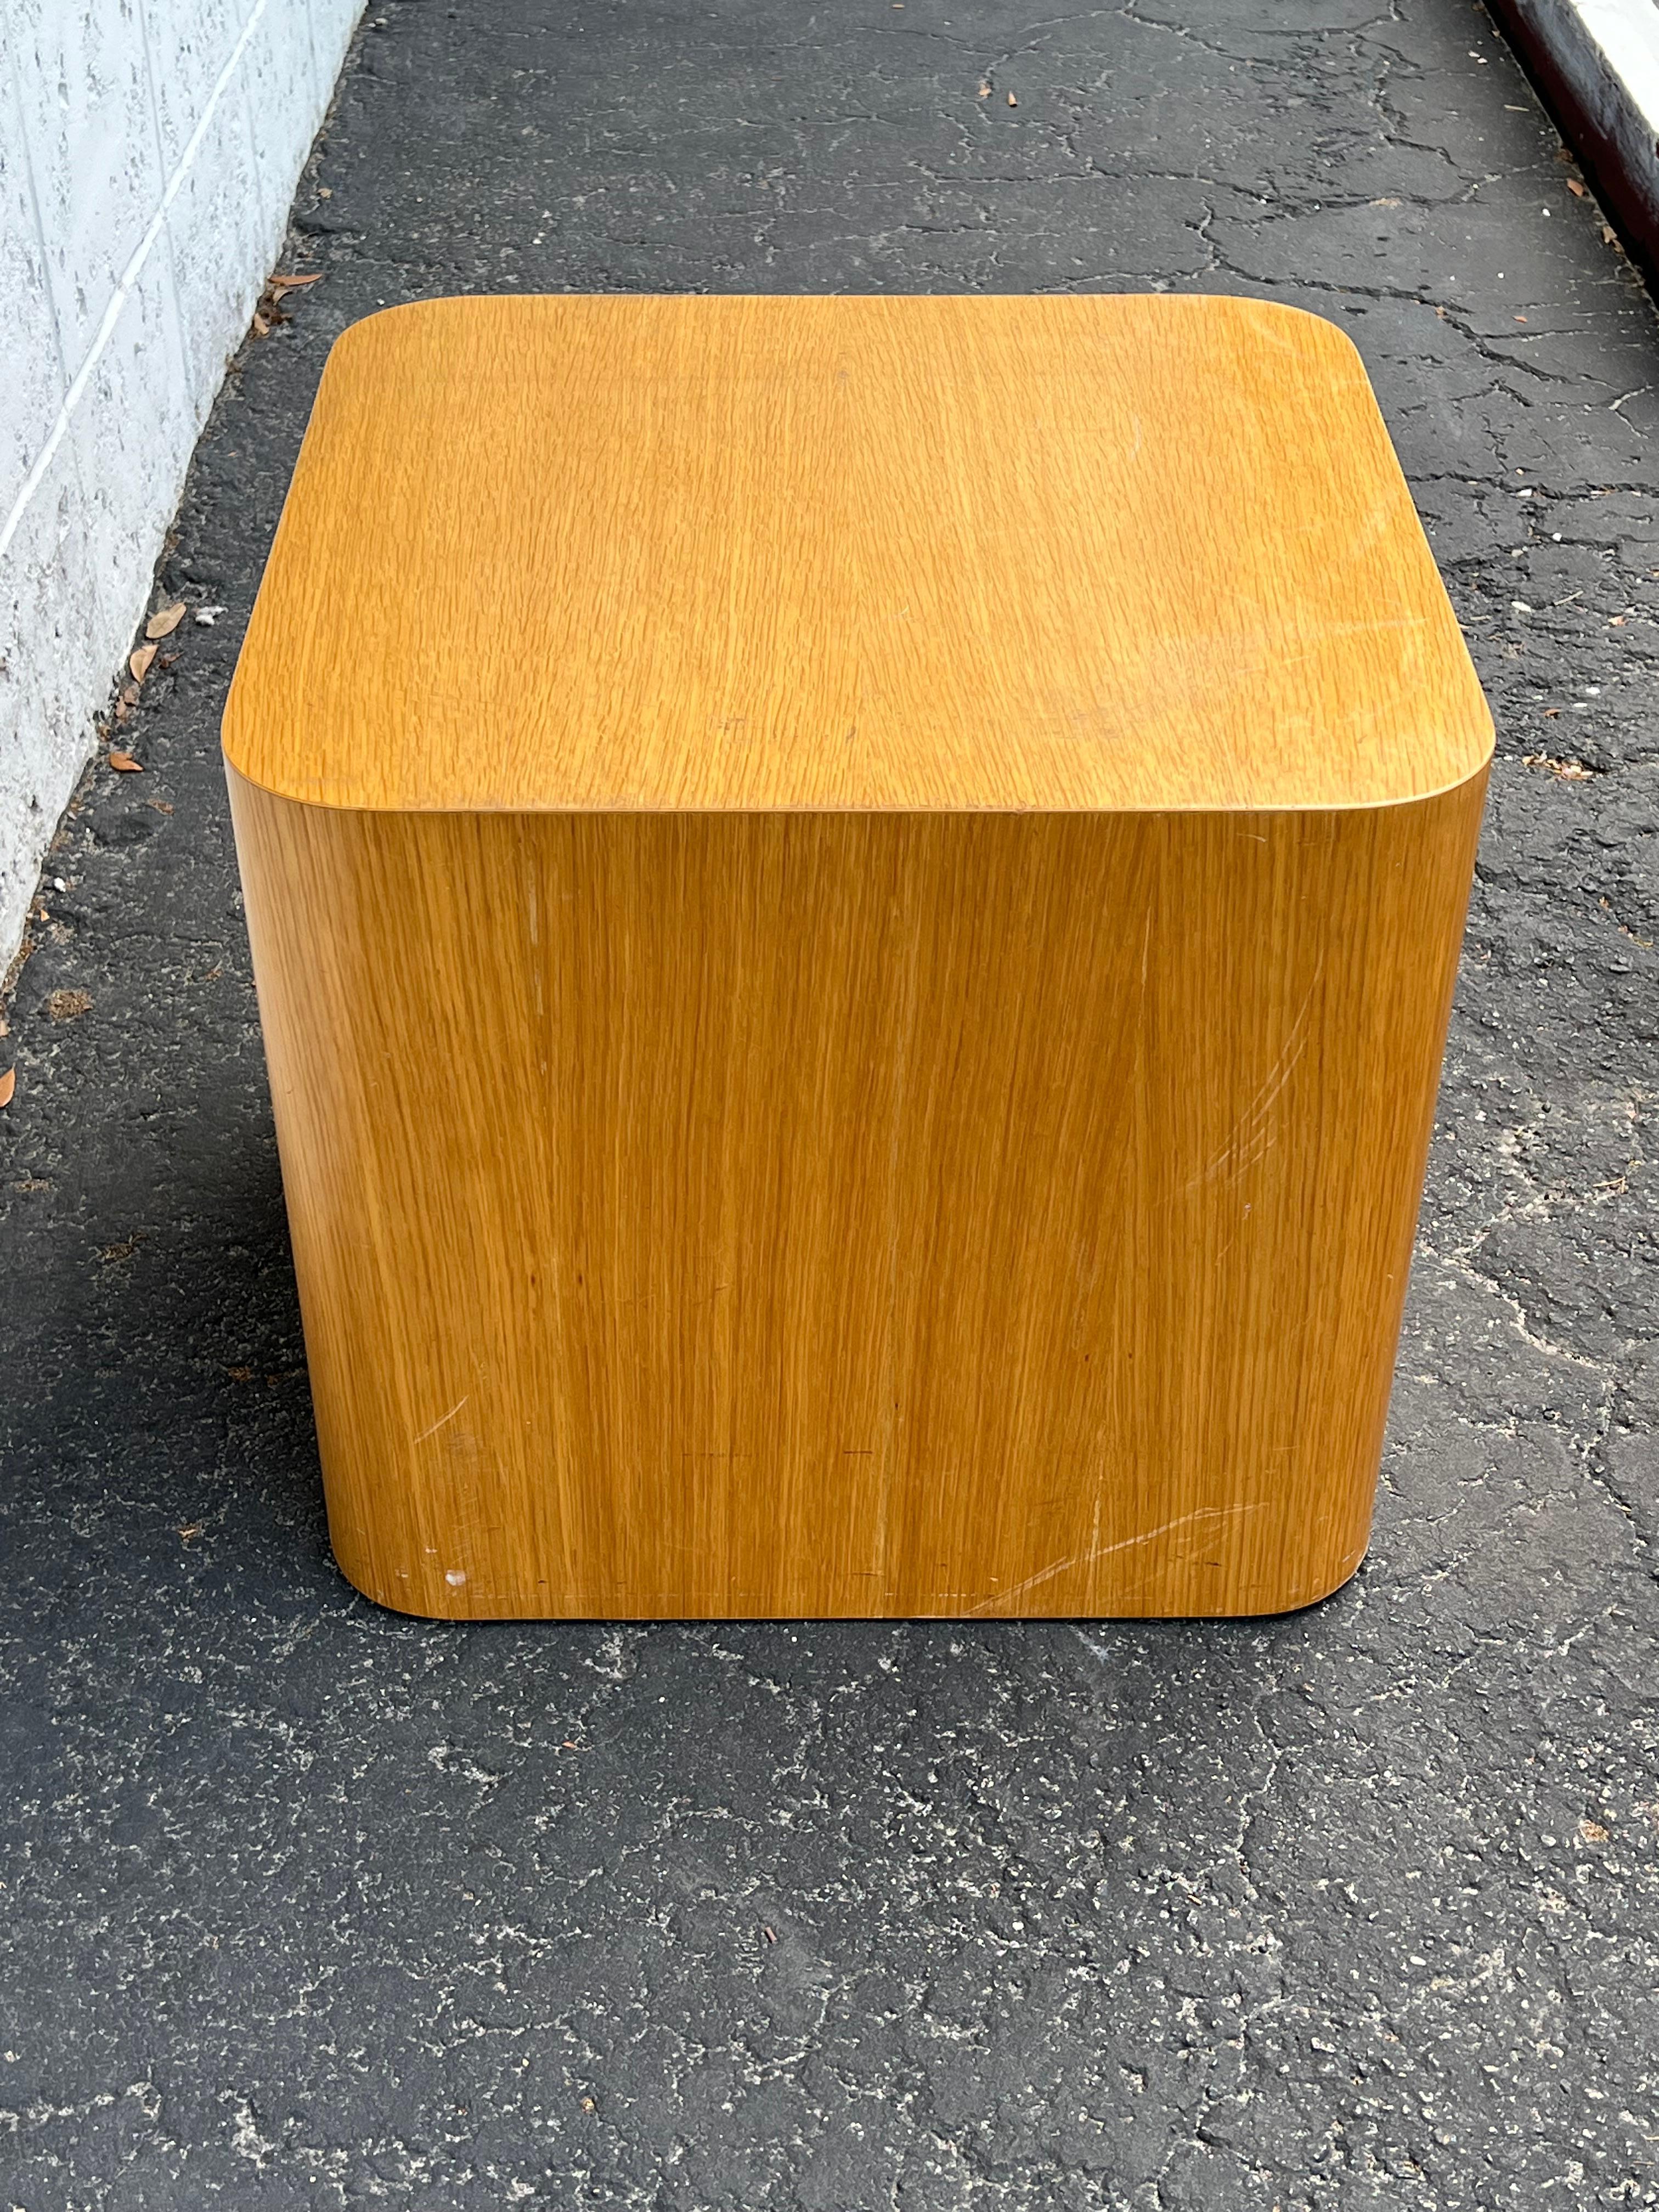 American Habitat Intrex Pedestal Table For Sale